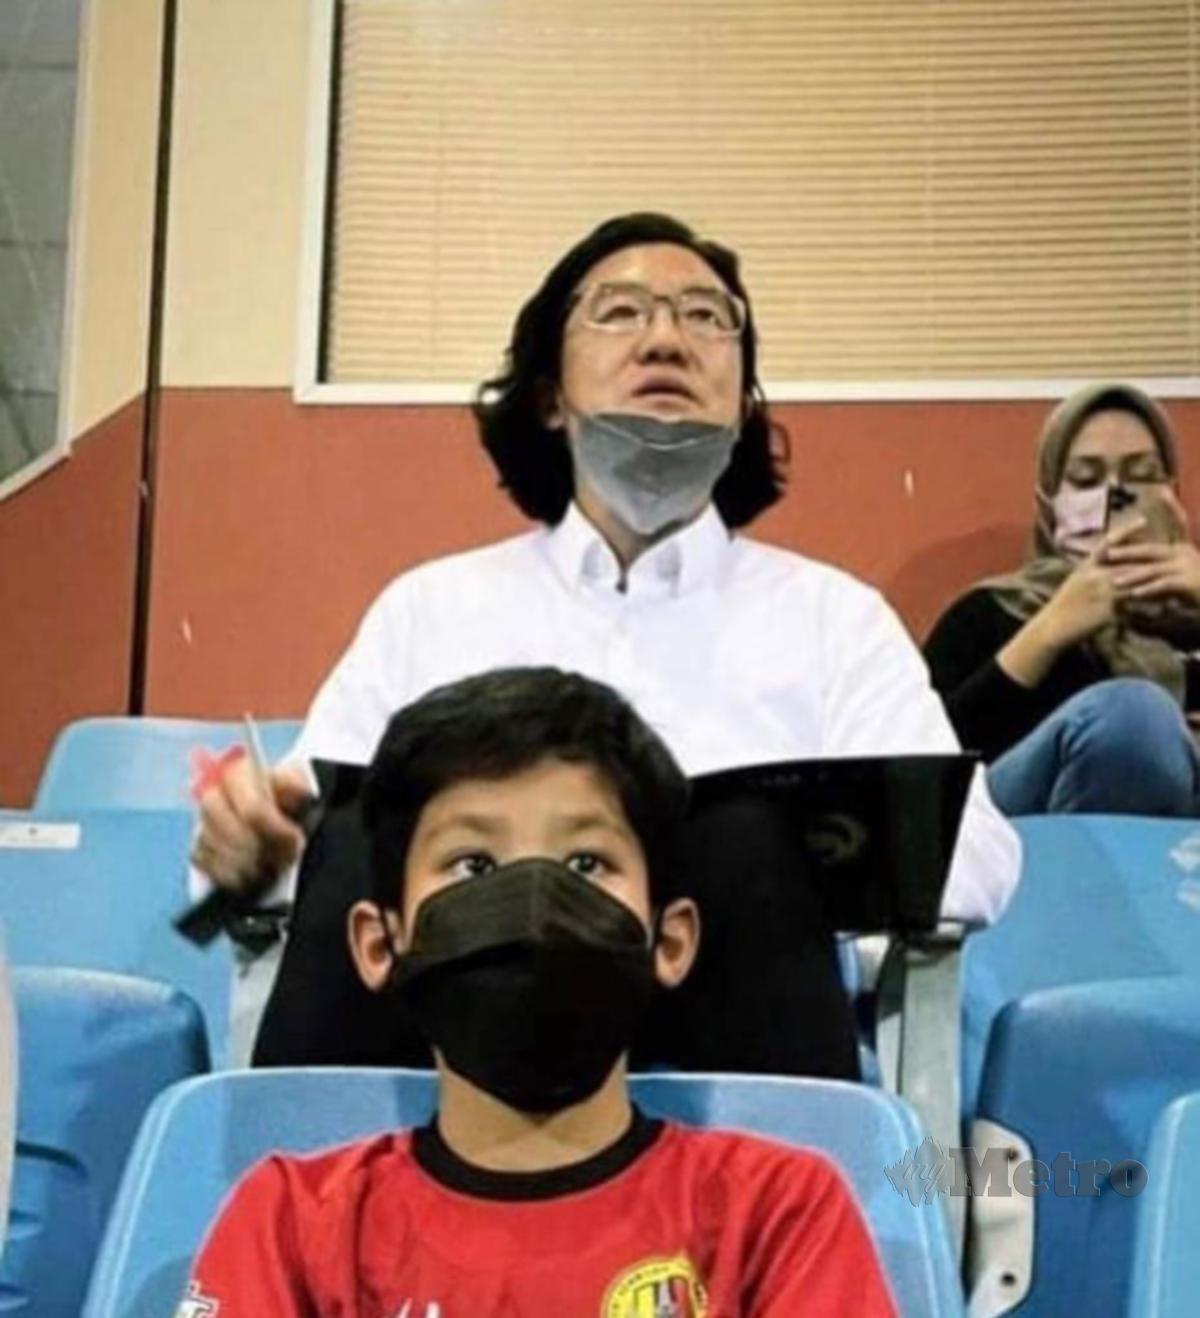 GAMBAR jurulatih negara, Kim Pan-gon yang viral di laman sosial dikatakan berada di Stadium Paroi ketika aksi Liga Super antara Negeri Sembilan FC menentang PJ City, Sabtu lalu. -FOTO Facebook